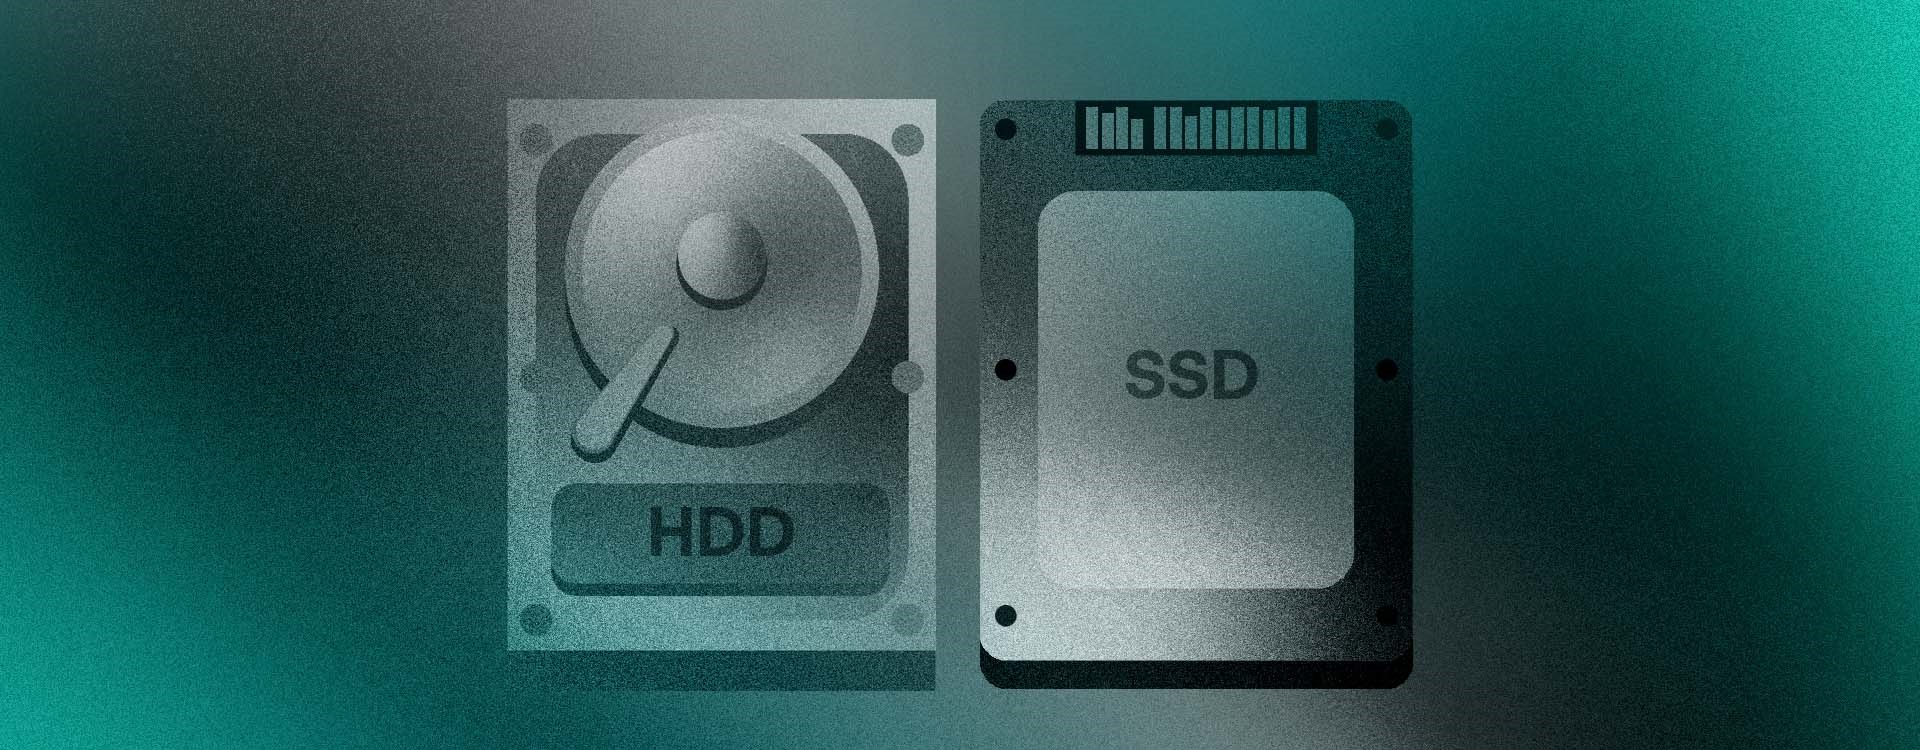 ssd vs. hdd